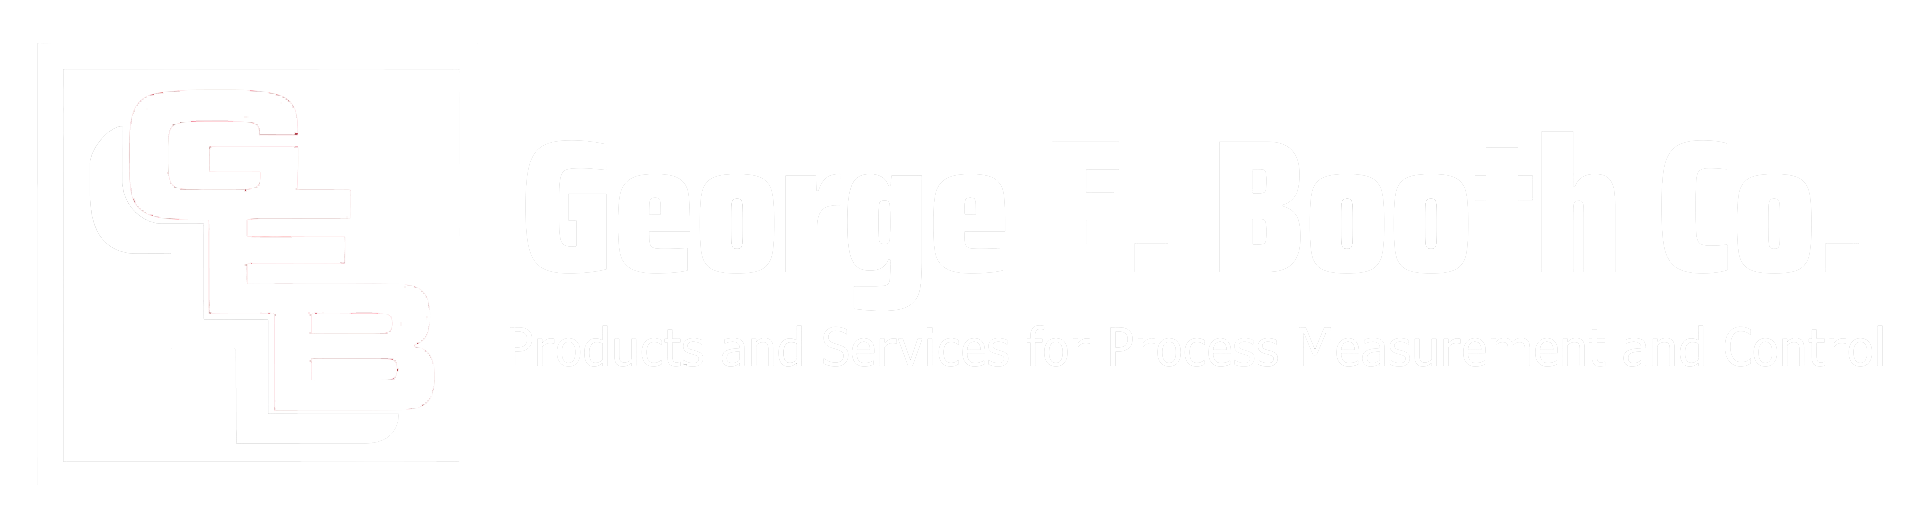 George E. Booth Co.